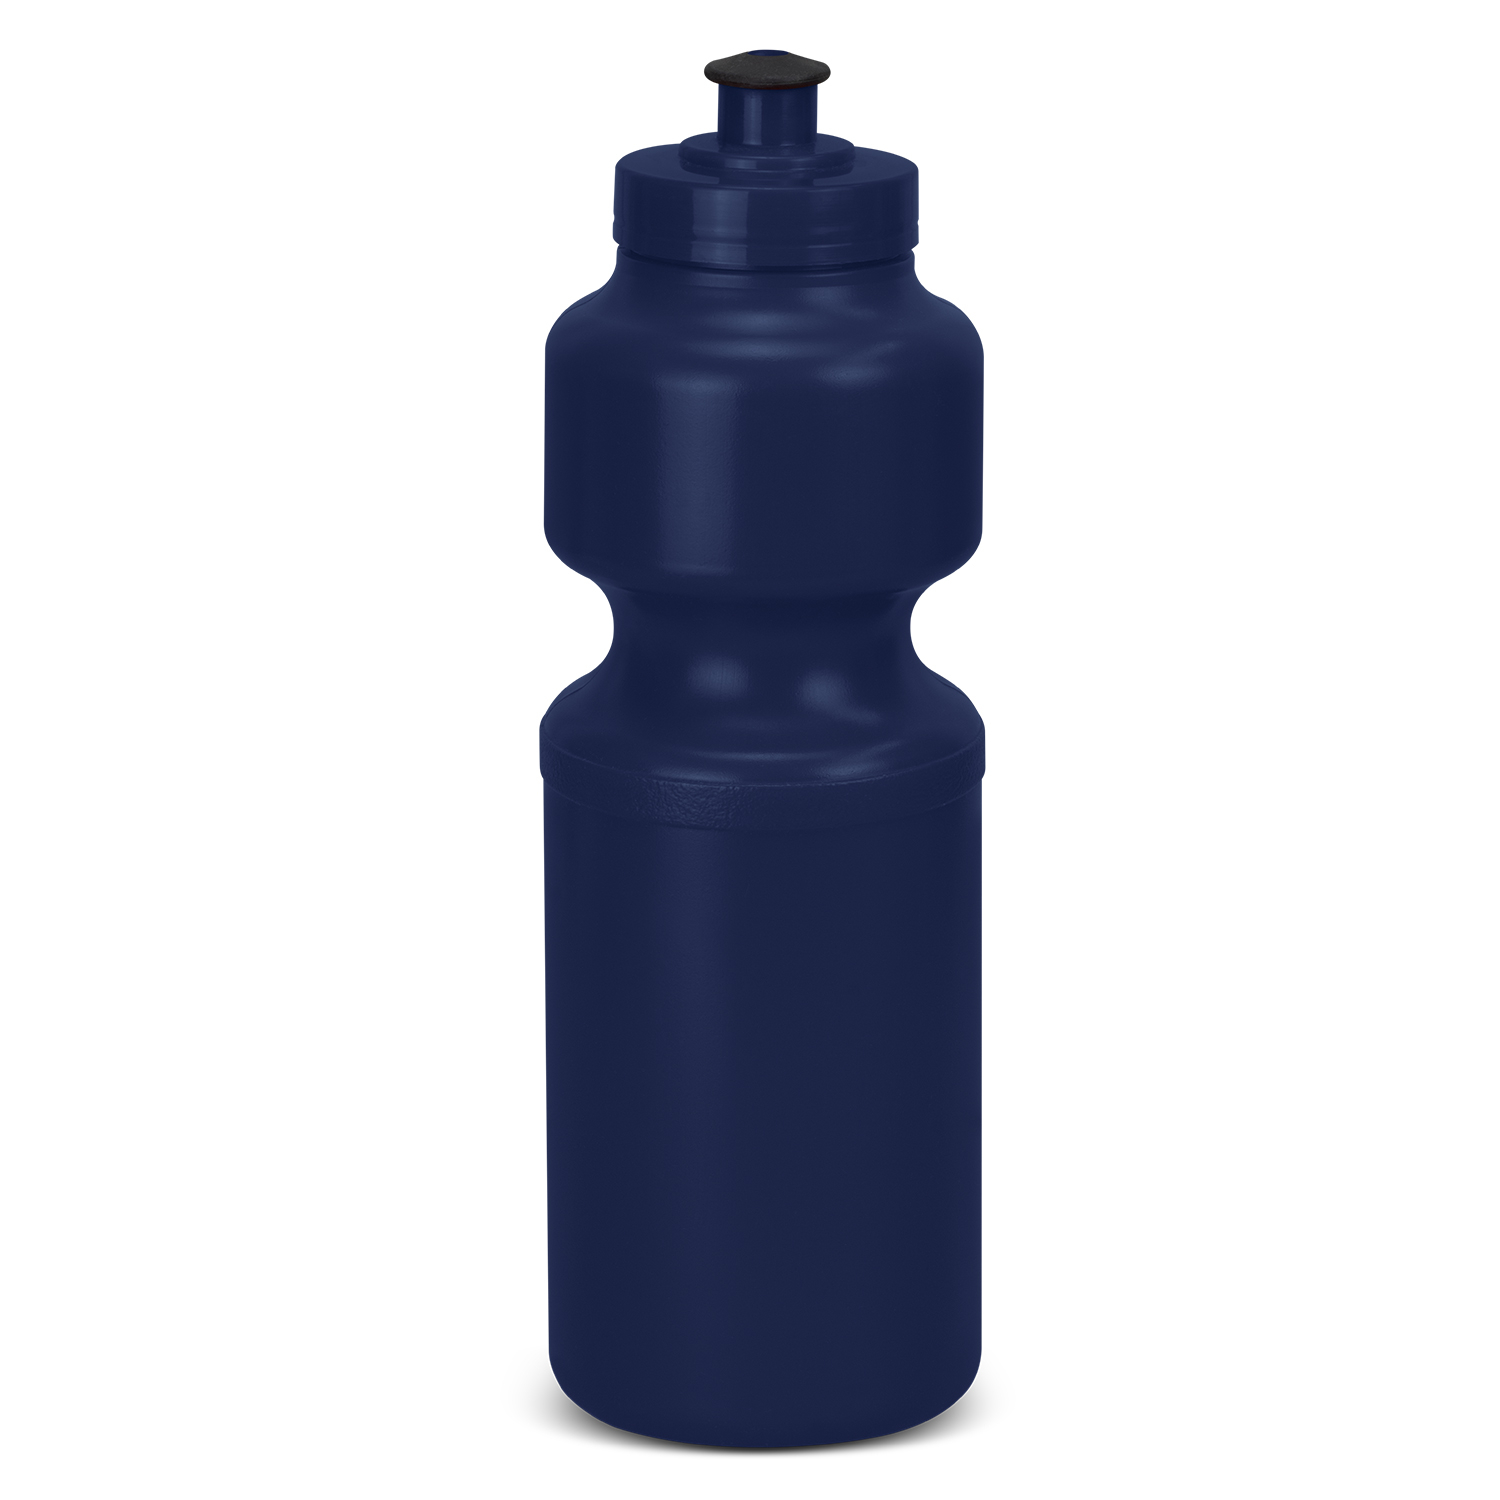 Quencher Bottle 126702 | Navy